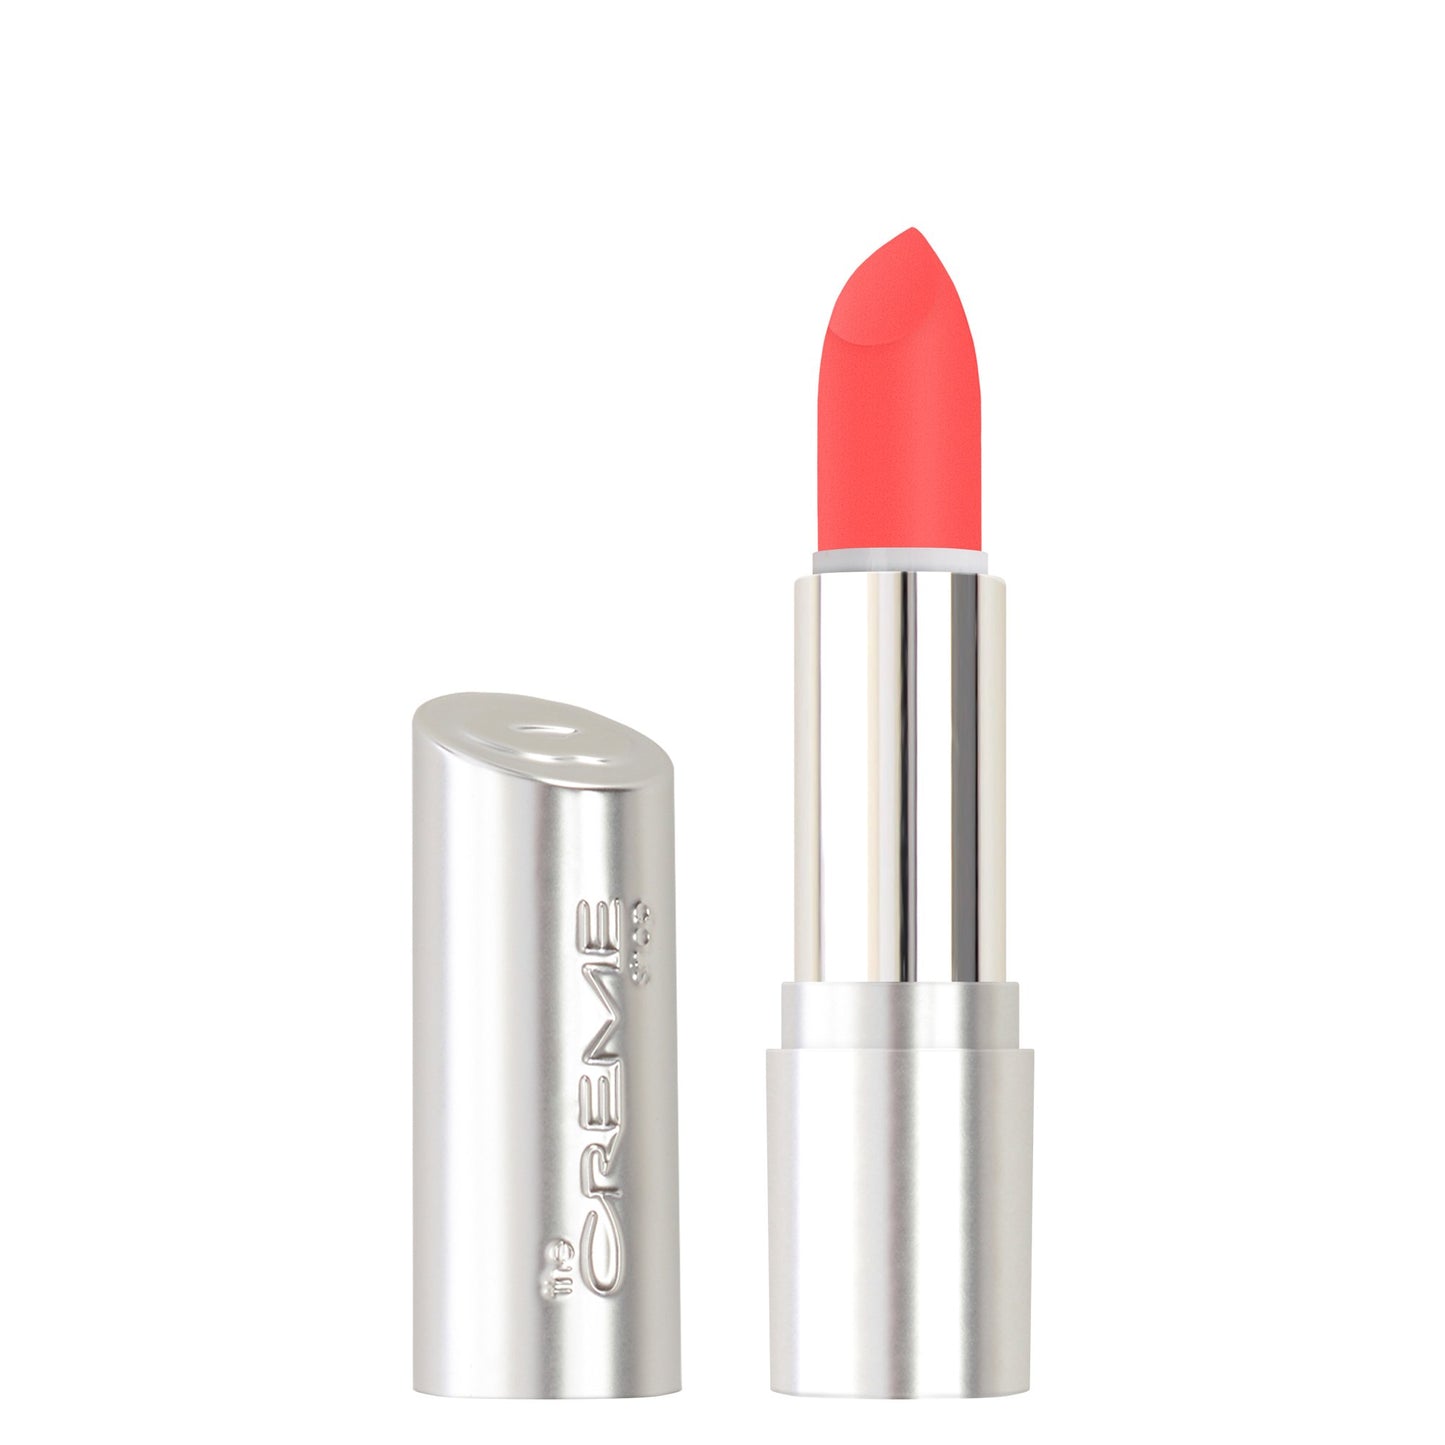 Read My Lipstick - Velvety Matte - The Crème Shop